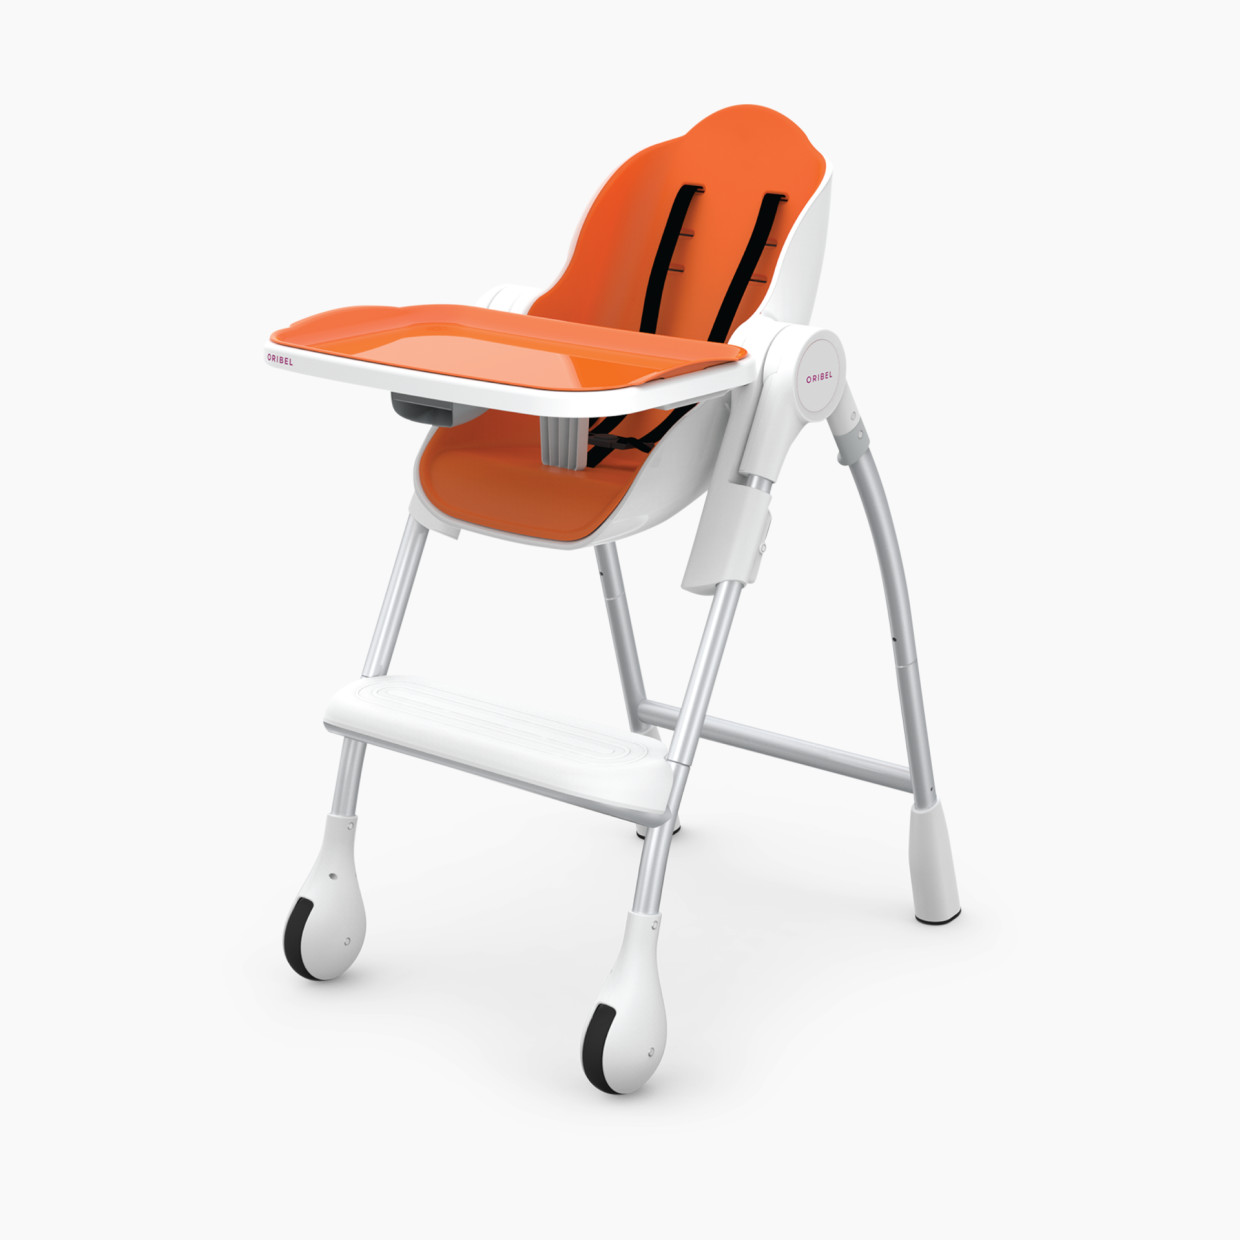 Oribel Cocoon High Chair - Orange.